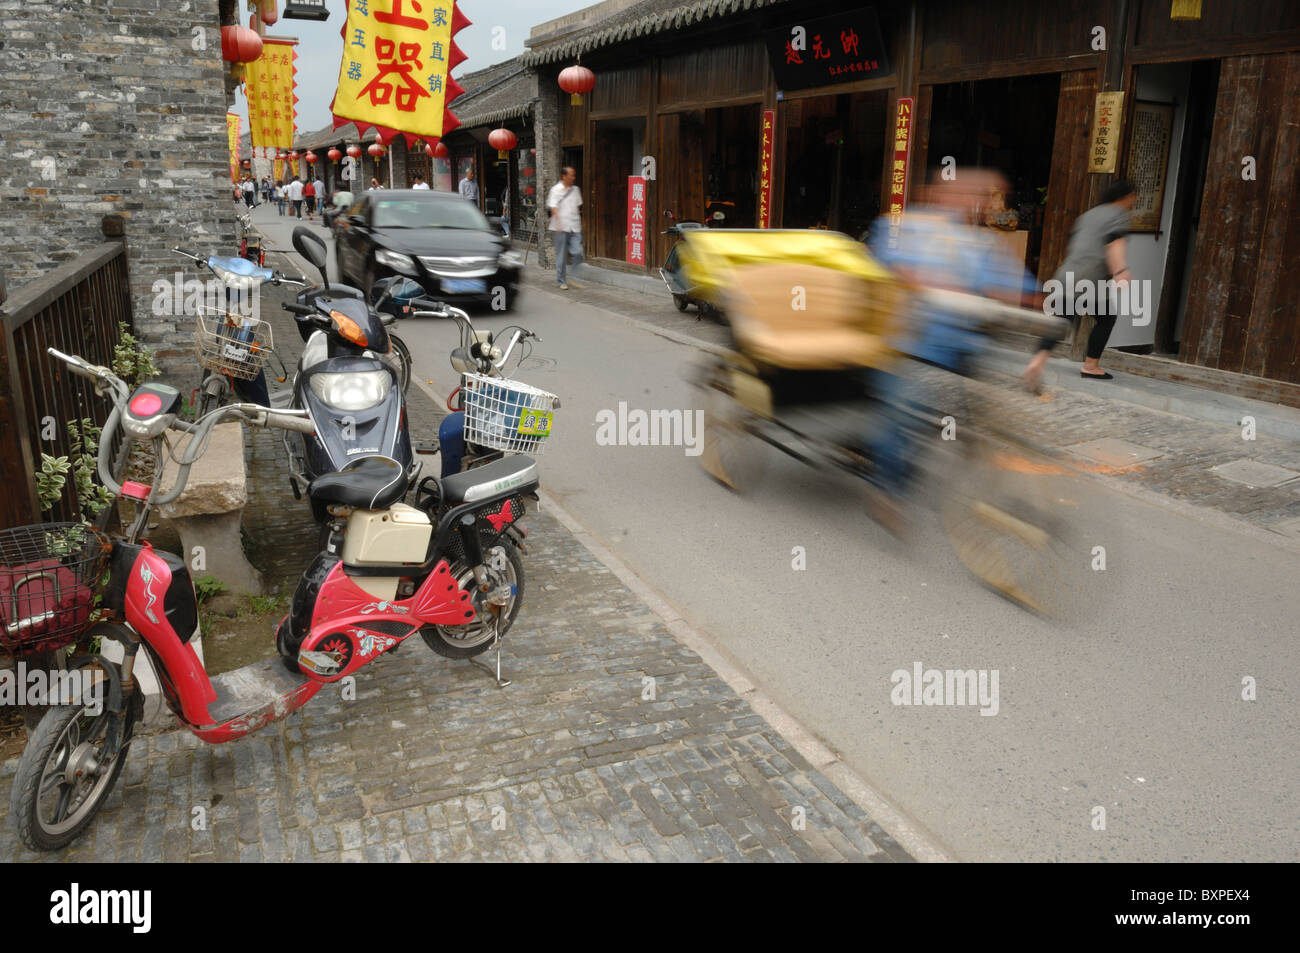 A blurred cyclist rickshaw on Dungguan Street in the Old Town area of Yangzhou Jiangsu Province of China Stock Photo